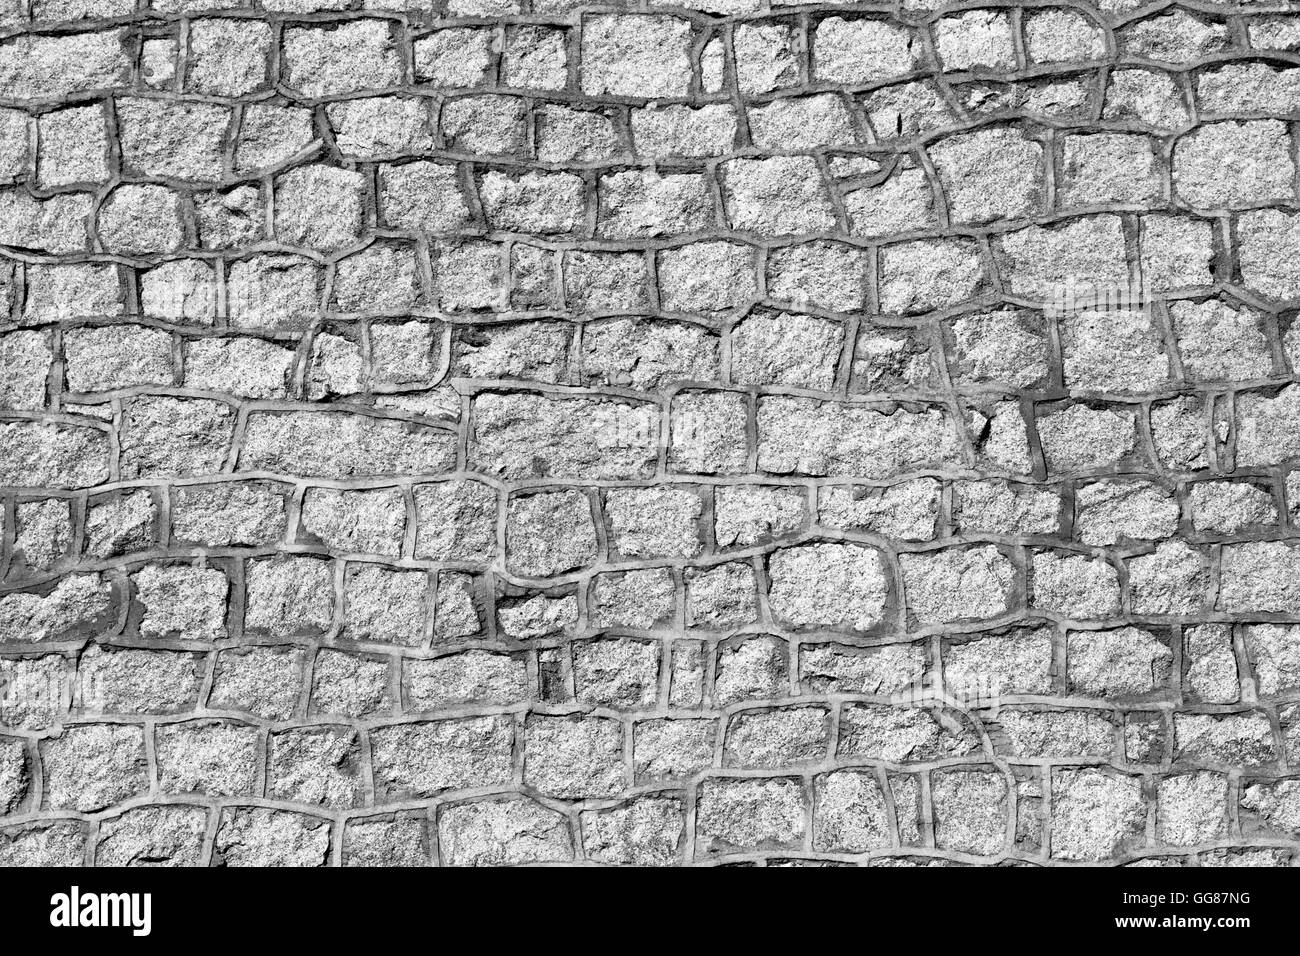 Background wall made of stone blocks Stock Photo